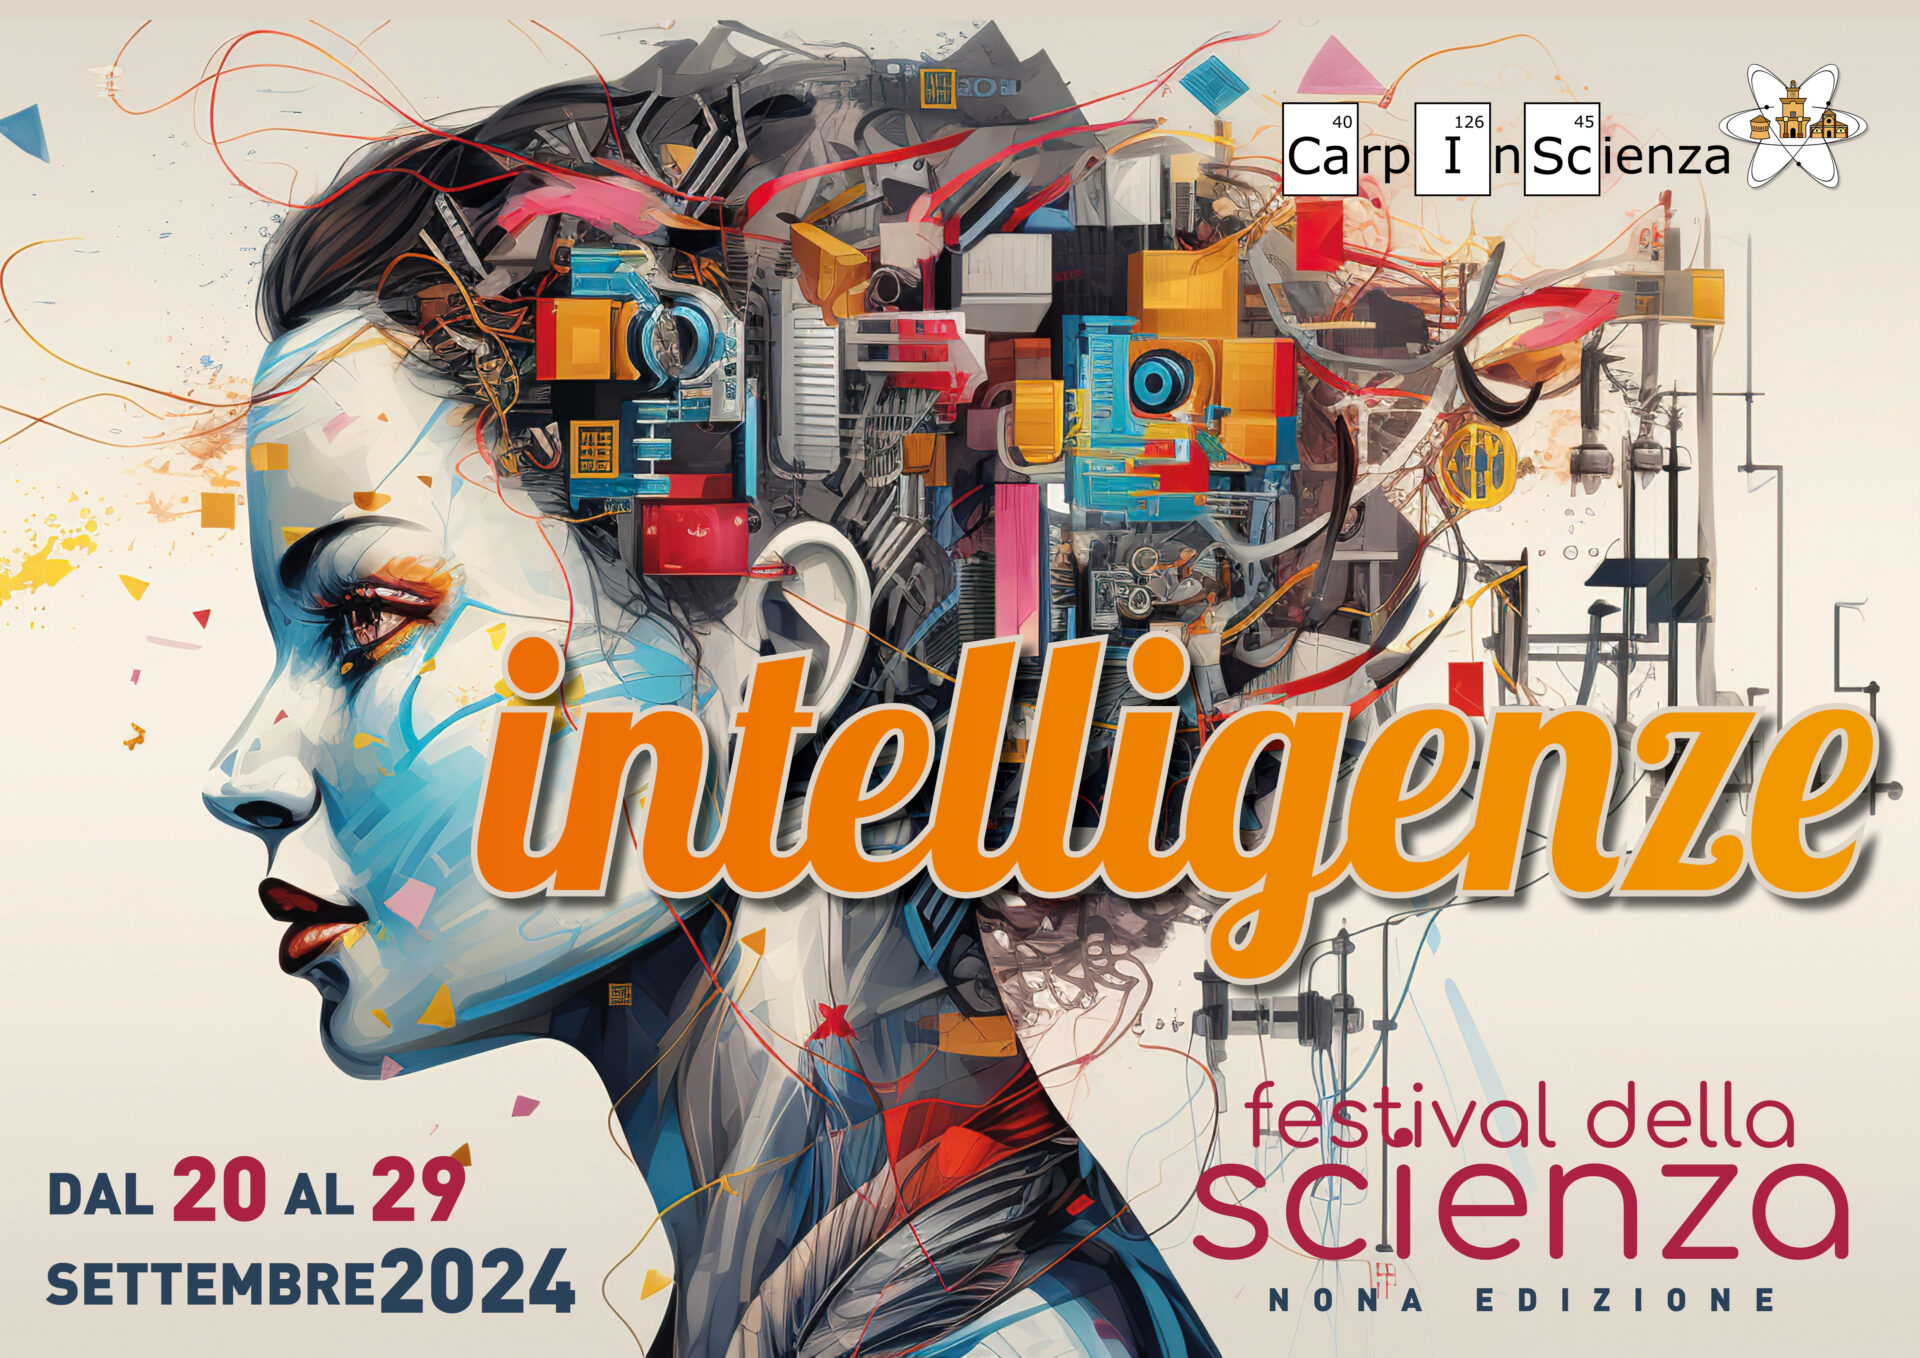 Locandina Edizione di Carpi In Scienza 2024, 
Tema : "Intelligenze".
presente dal 20 al 29 settembre 2024 a Carpi.